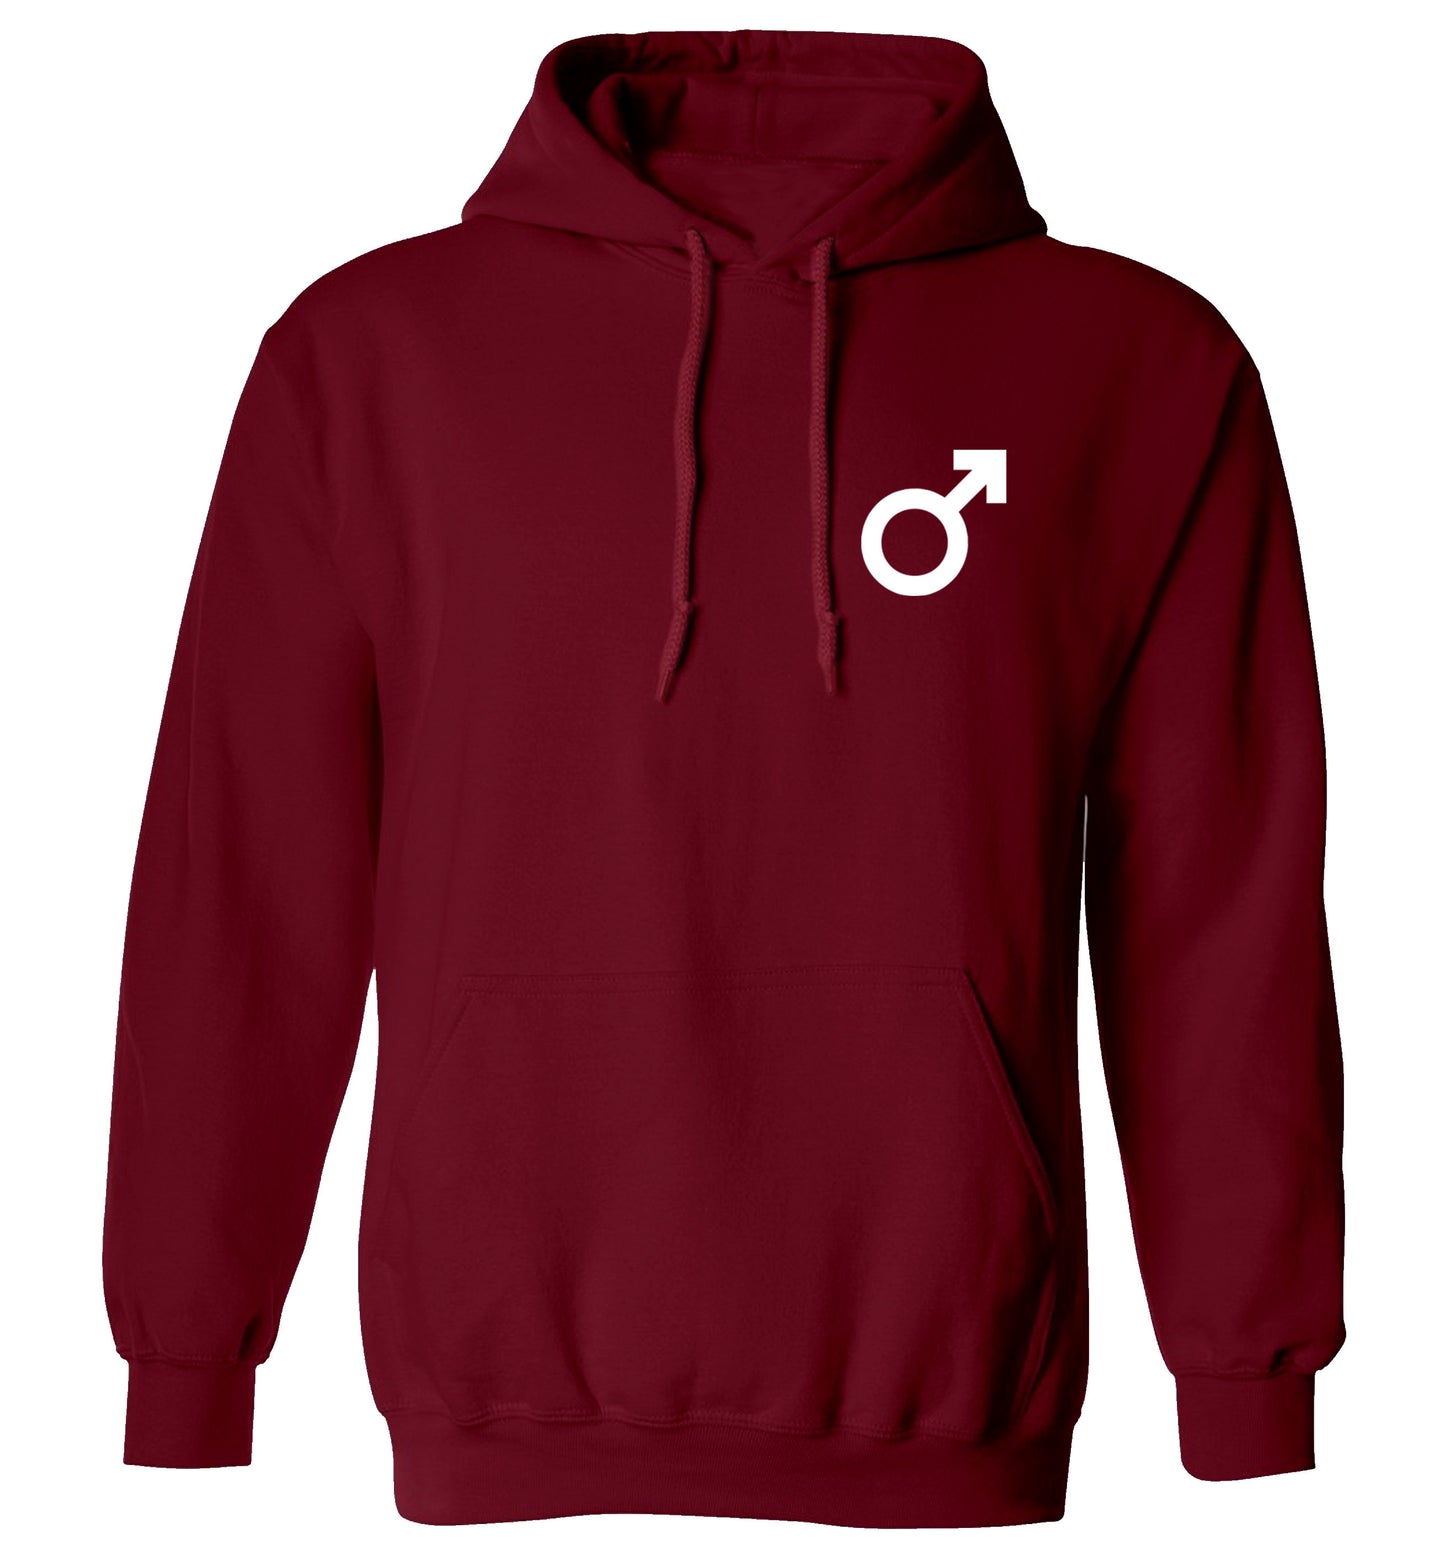 Male symbol pocket adults unisex maroon hoodie 2XL